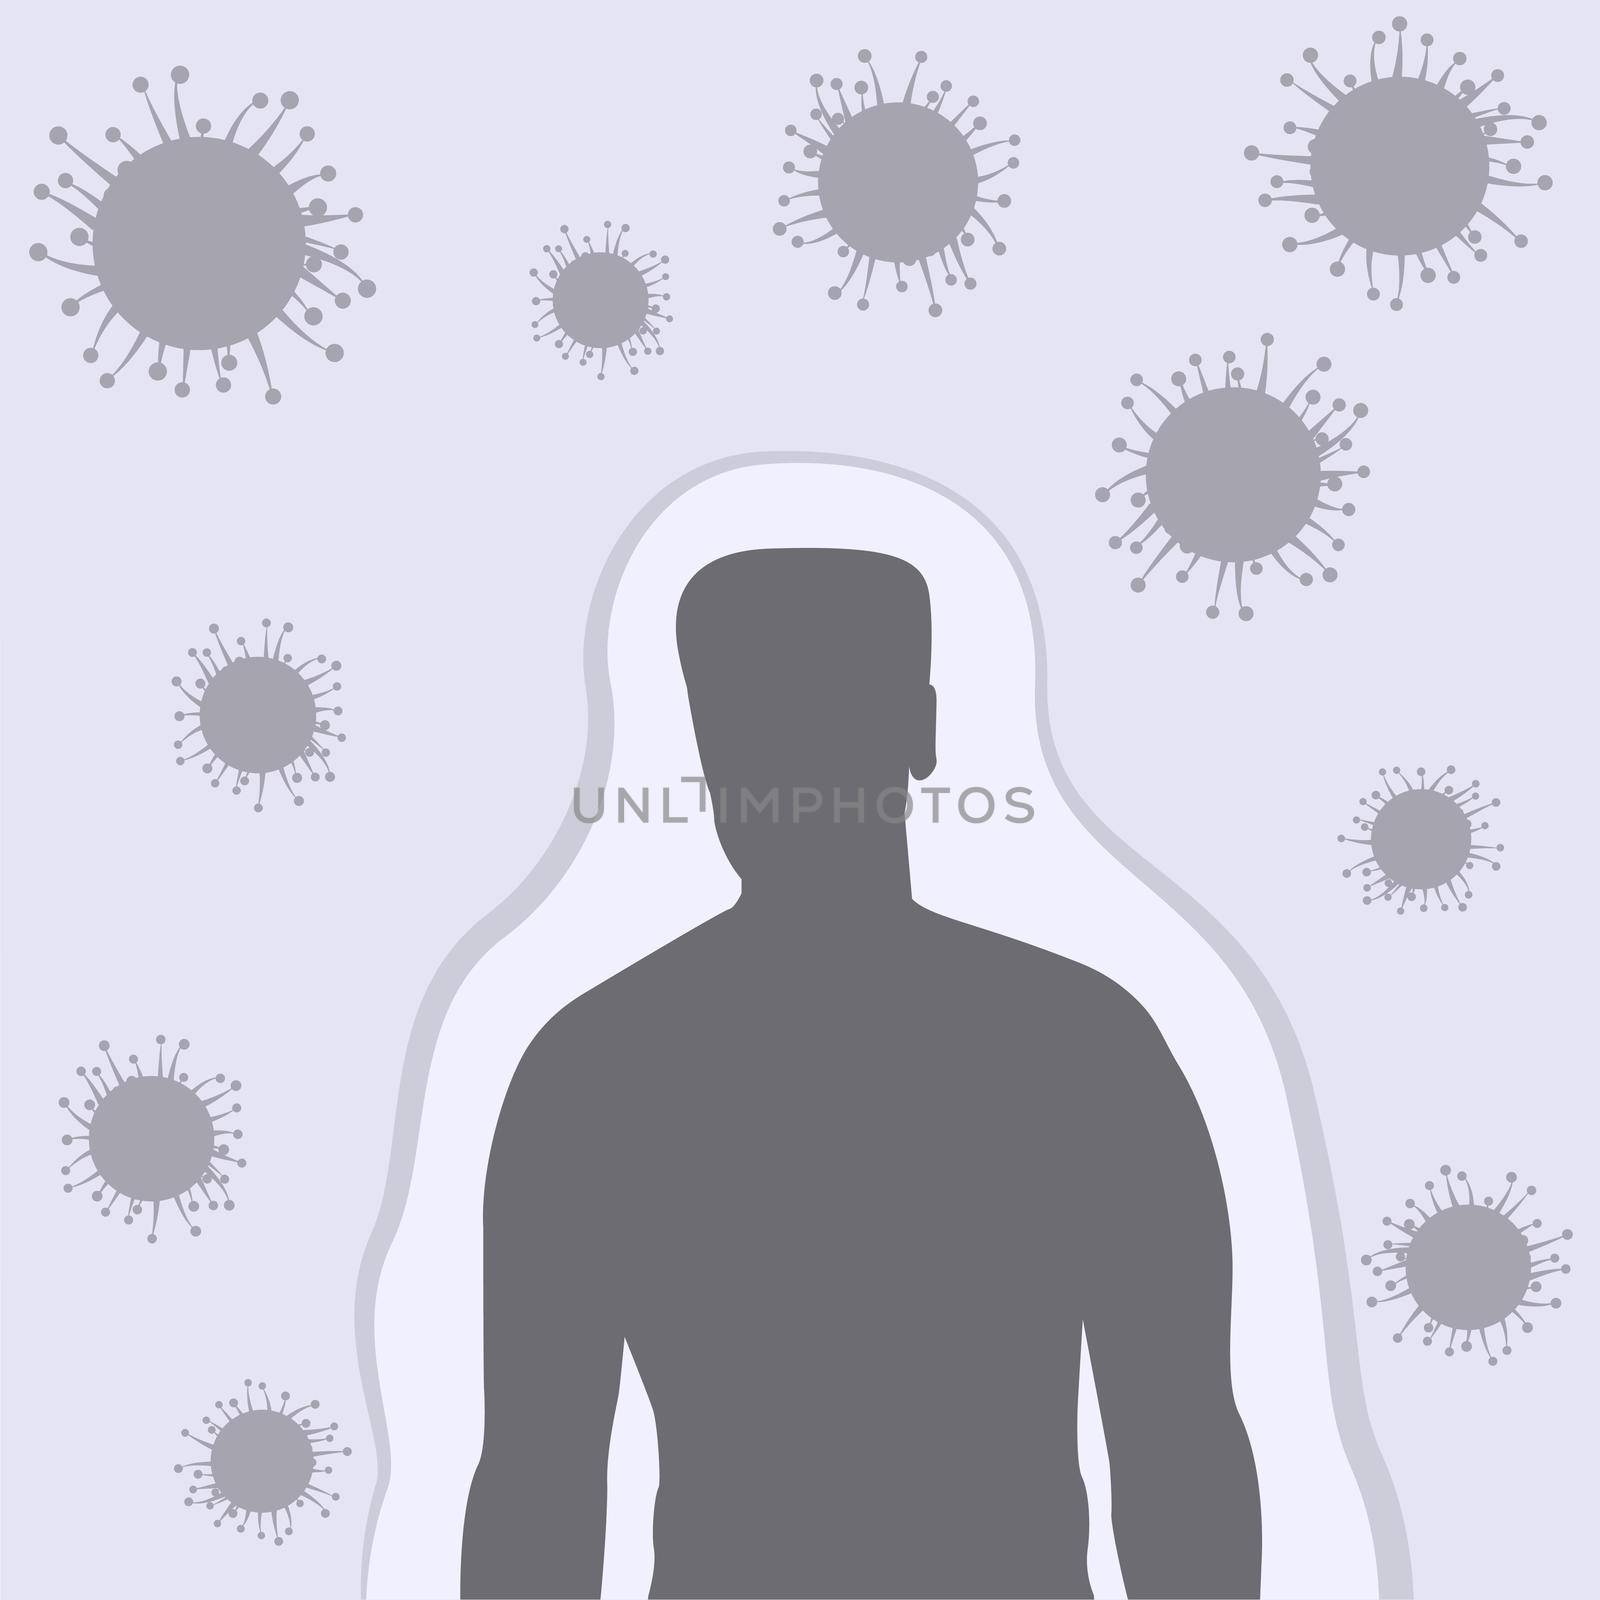 Immune system protection from viruses vector illustration